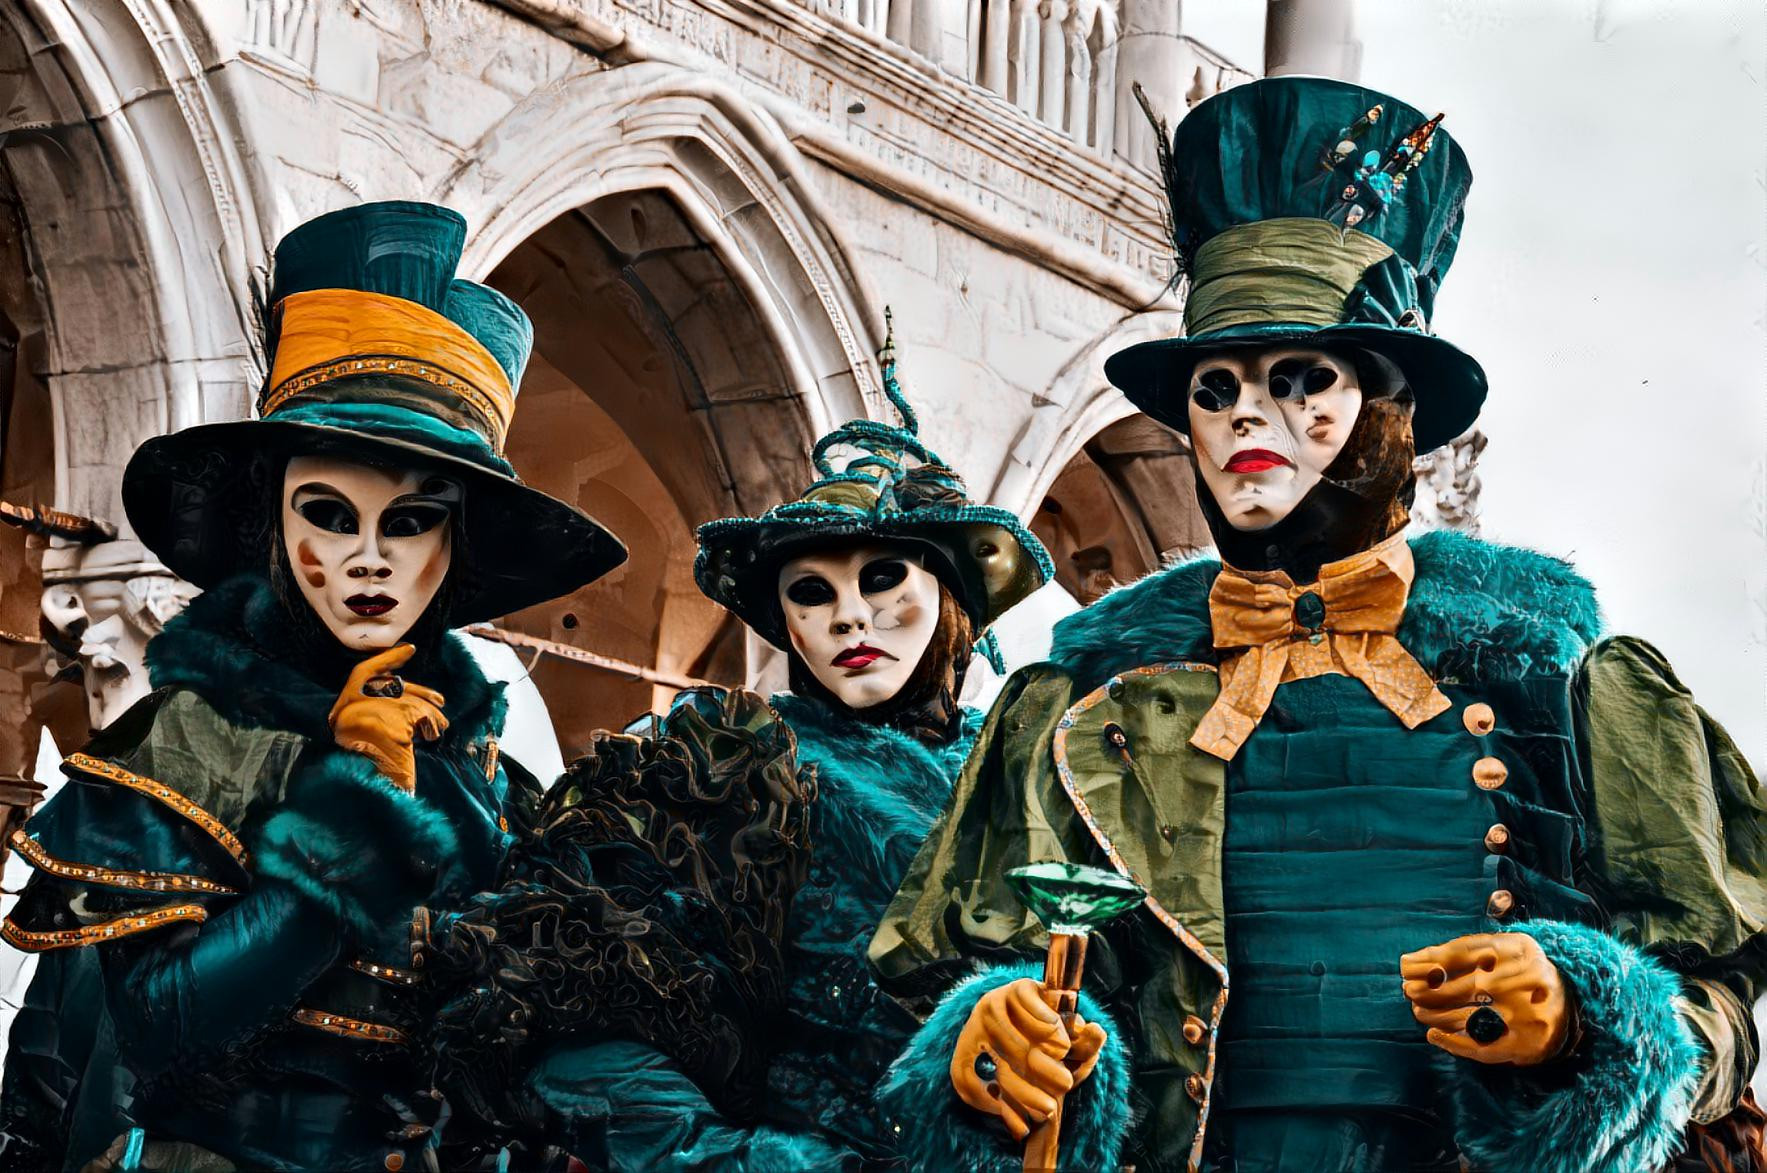 Venice, Turquoise Masks